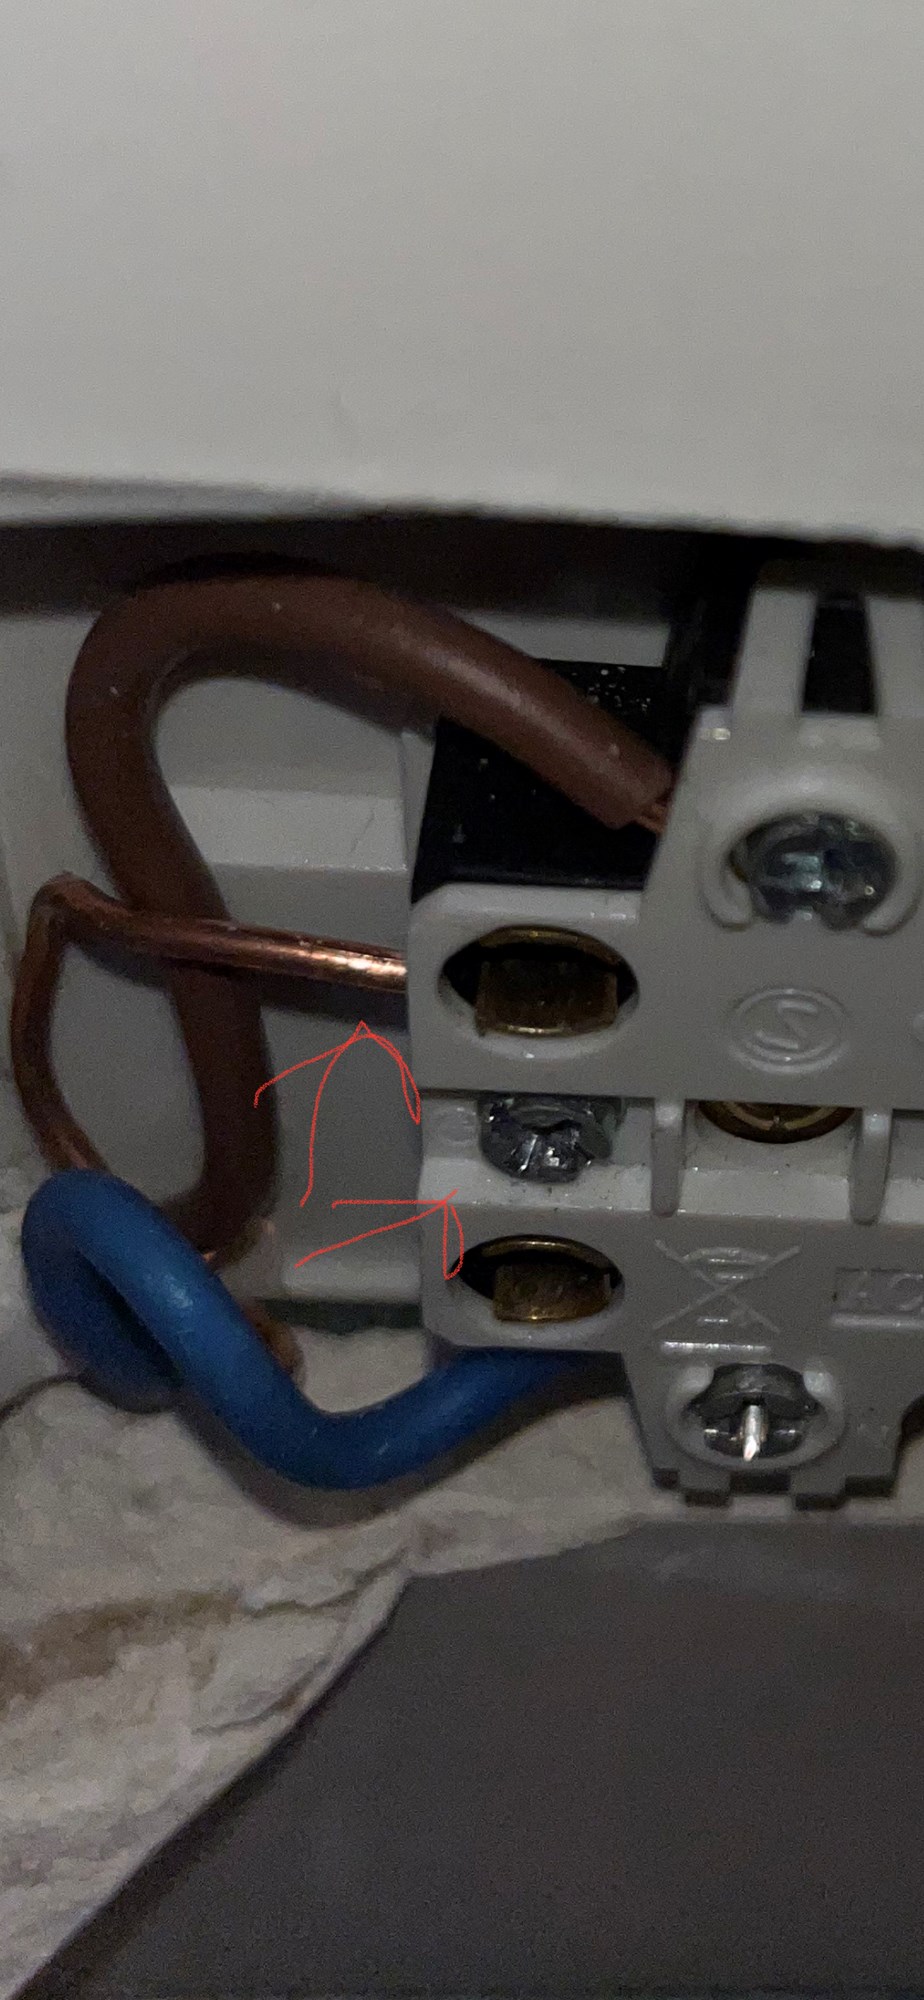 Løs kobber kabel i stikk kontakt med defekt skrue? - 69B31846-1475-46FE-8A64-3C79B995D71A.jpeg - Ray87